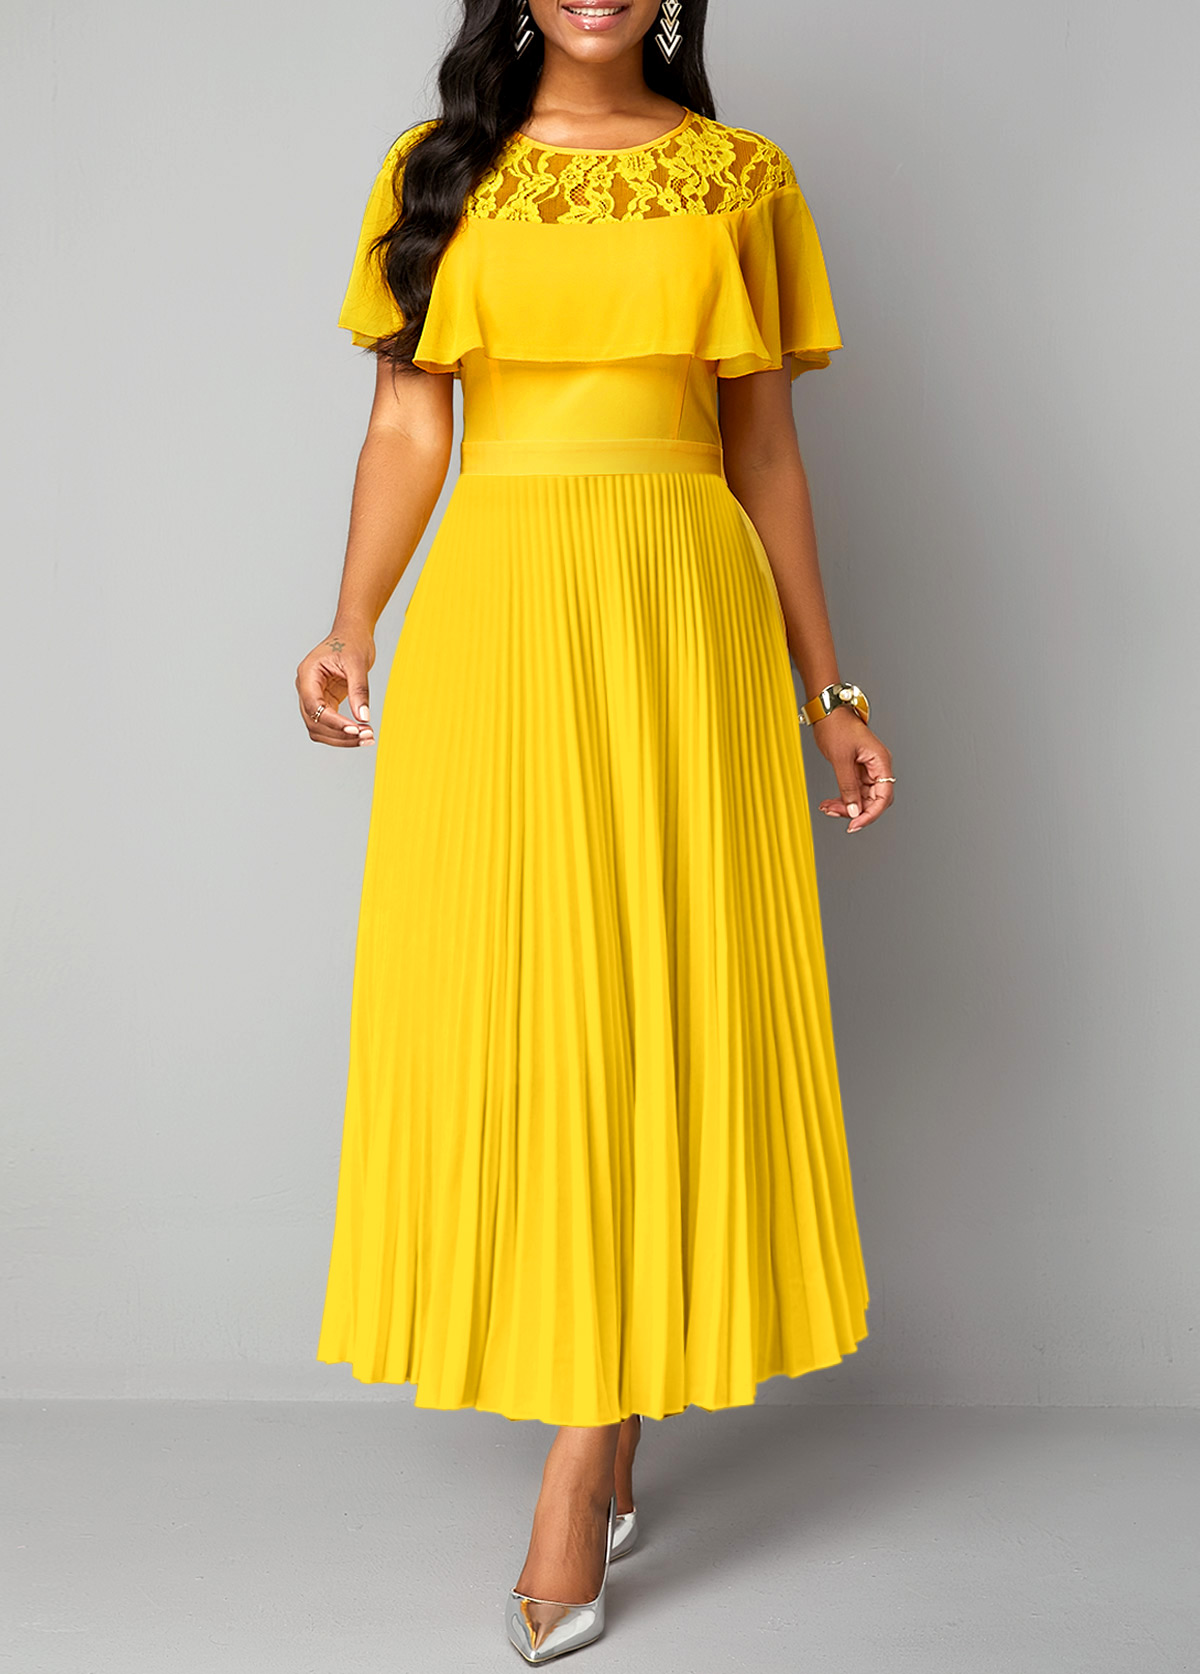 ROTITA Plus Size Lace Yellow Maxi Round Neck Dress